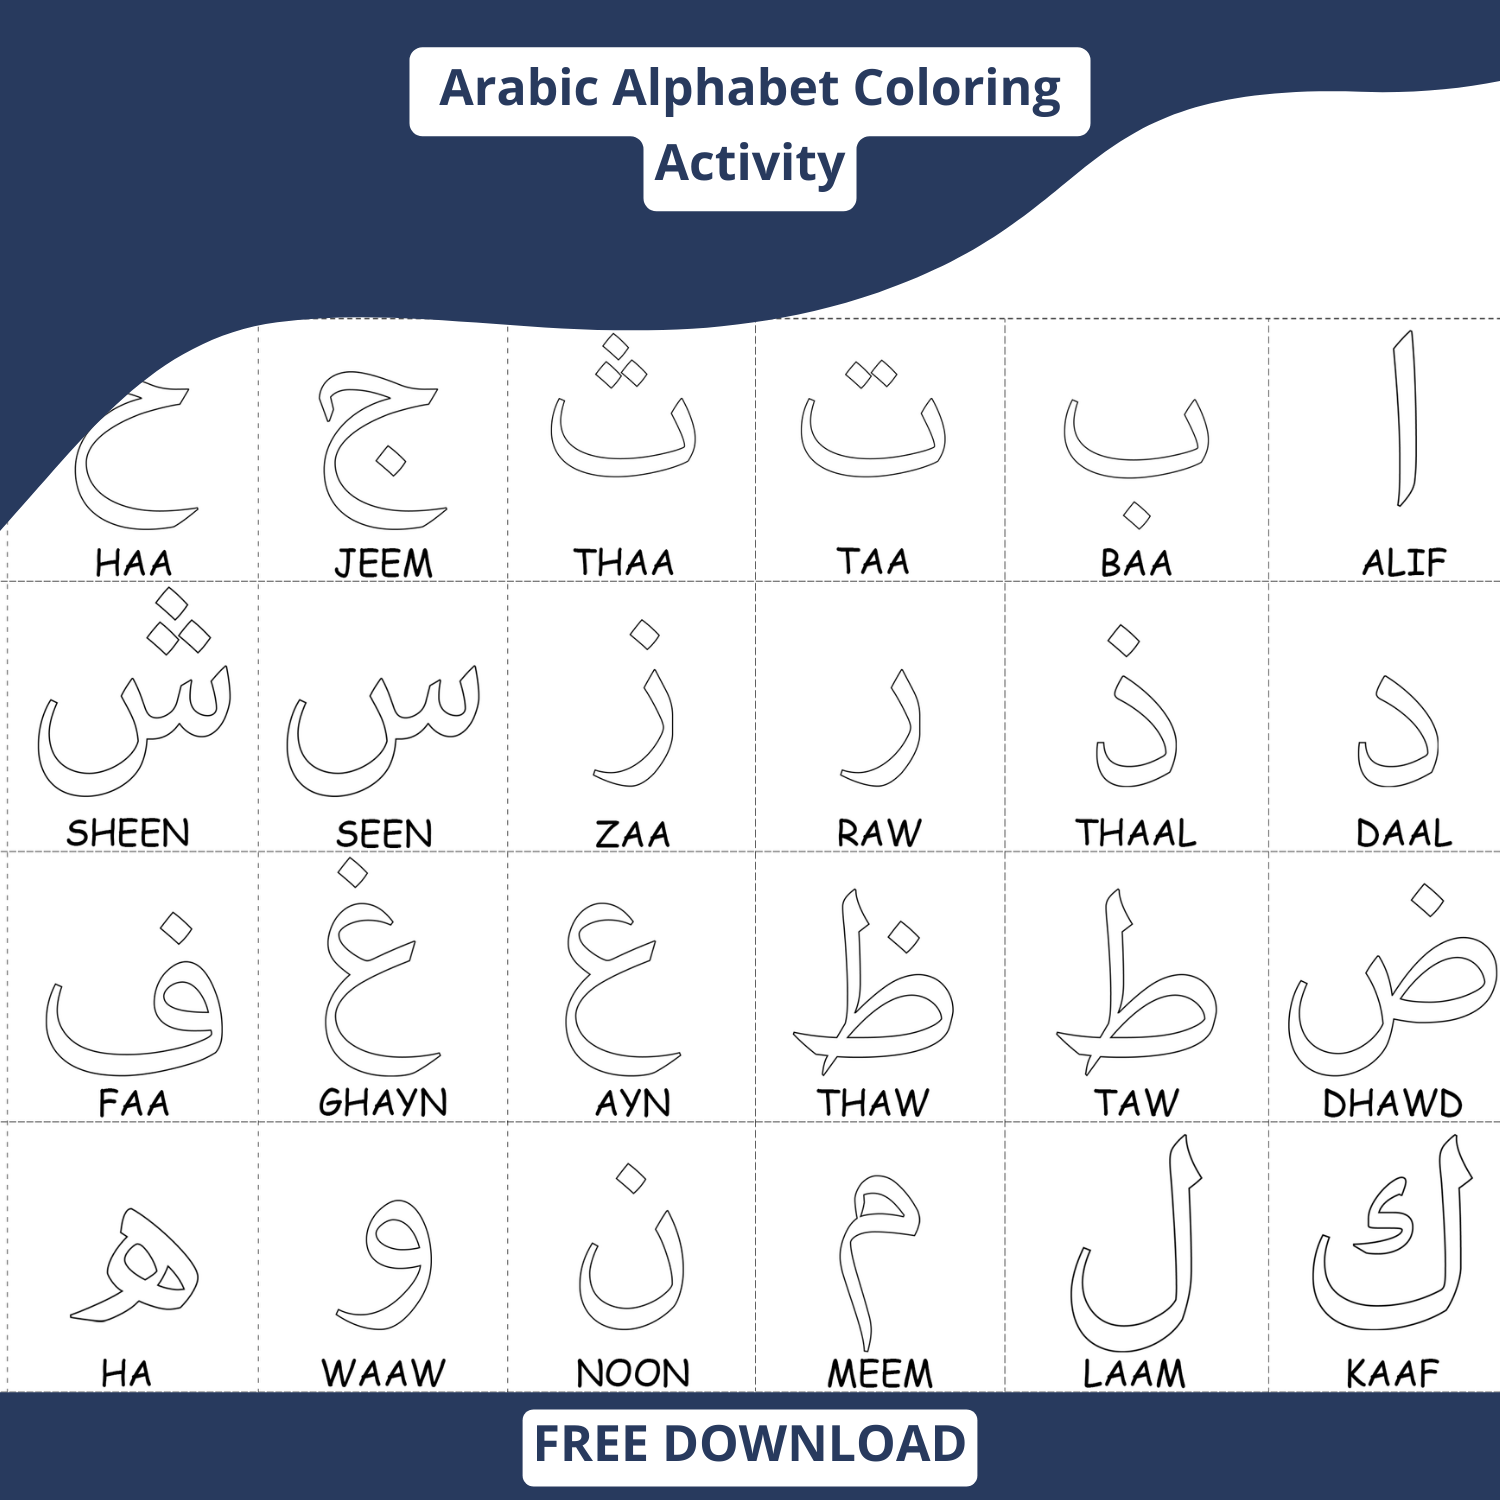 Arabic Alphabet - Coloring Activity (With English Pronunciation)